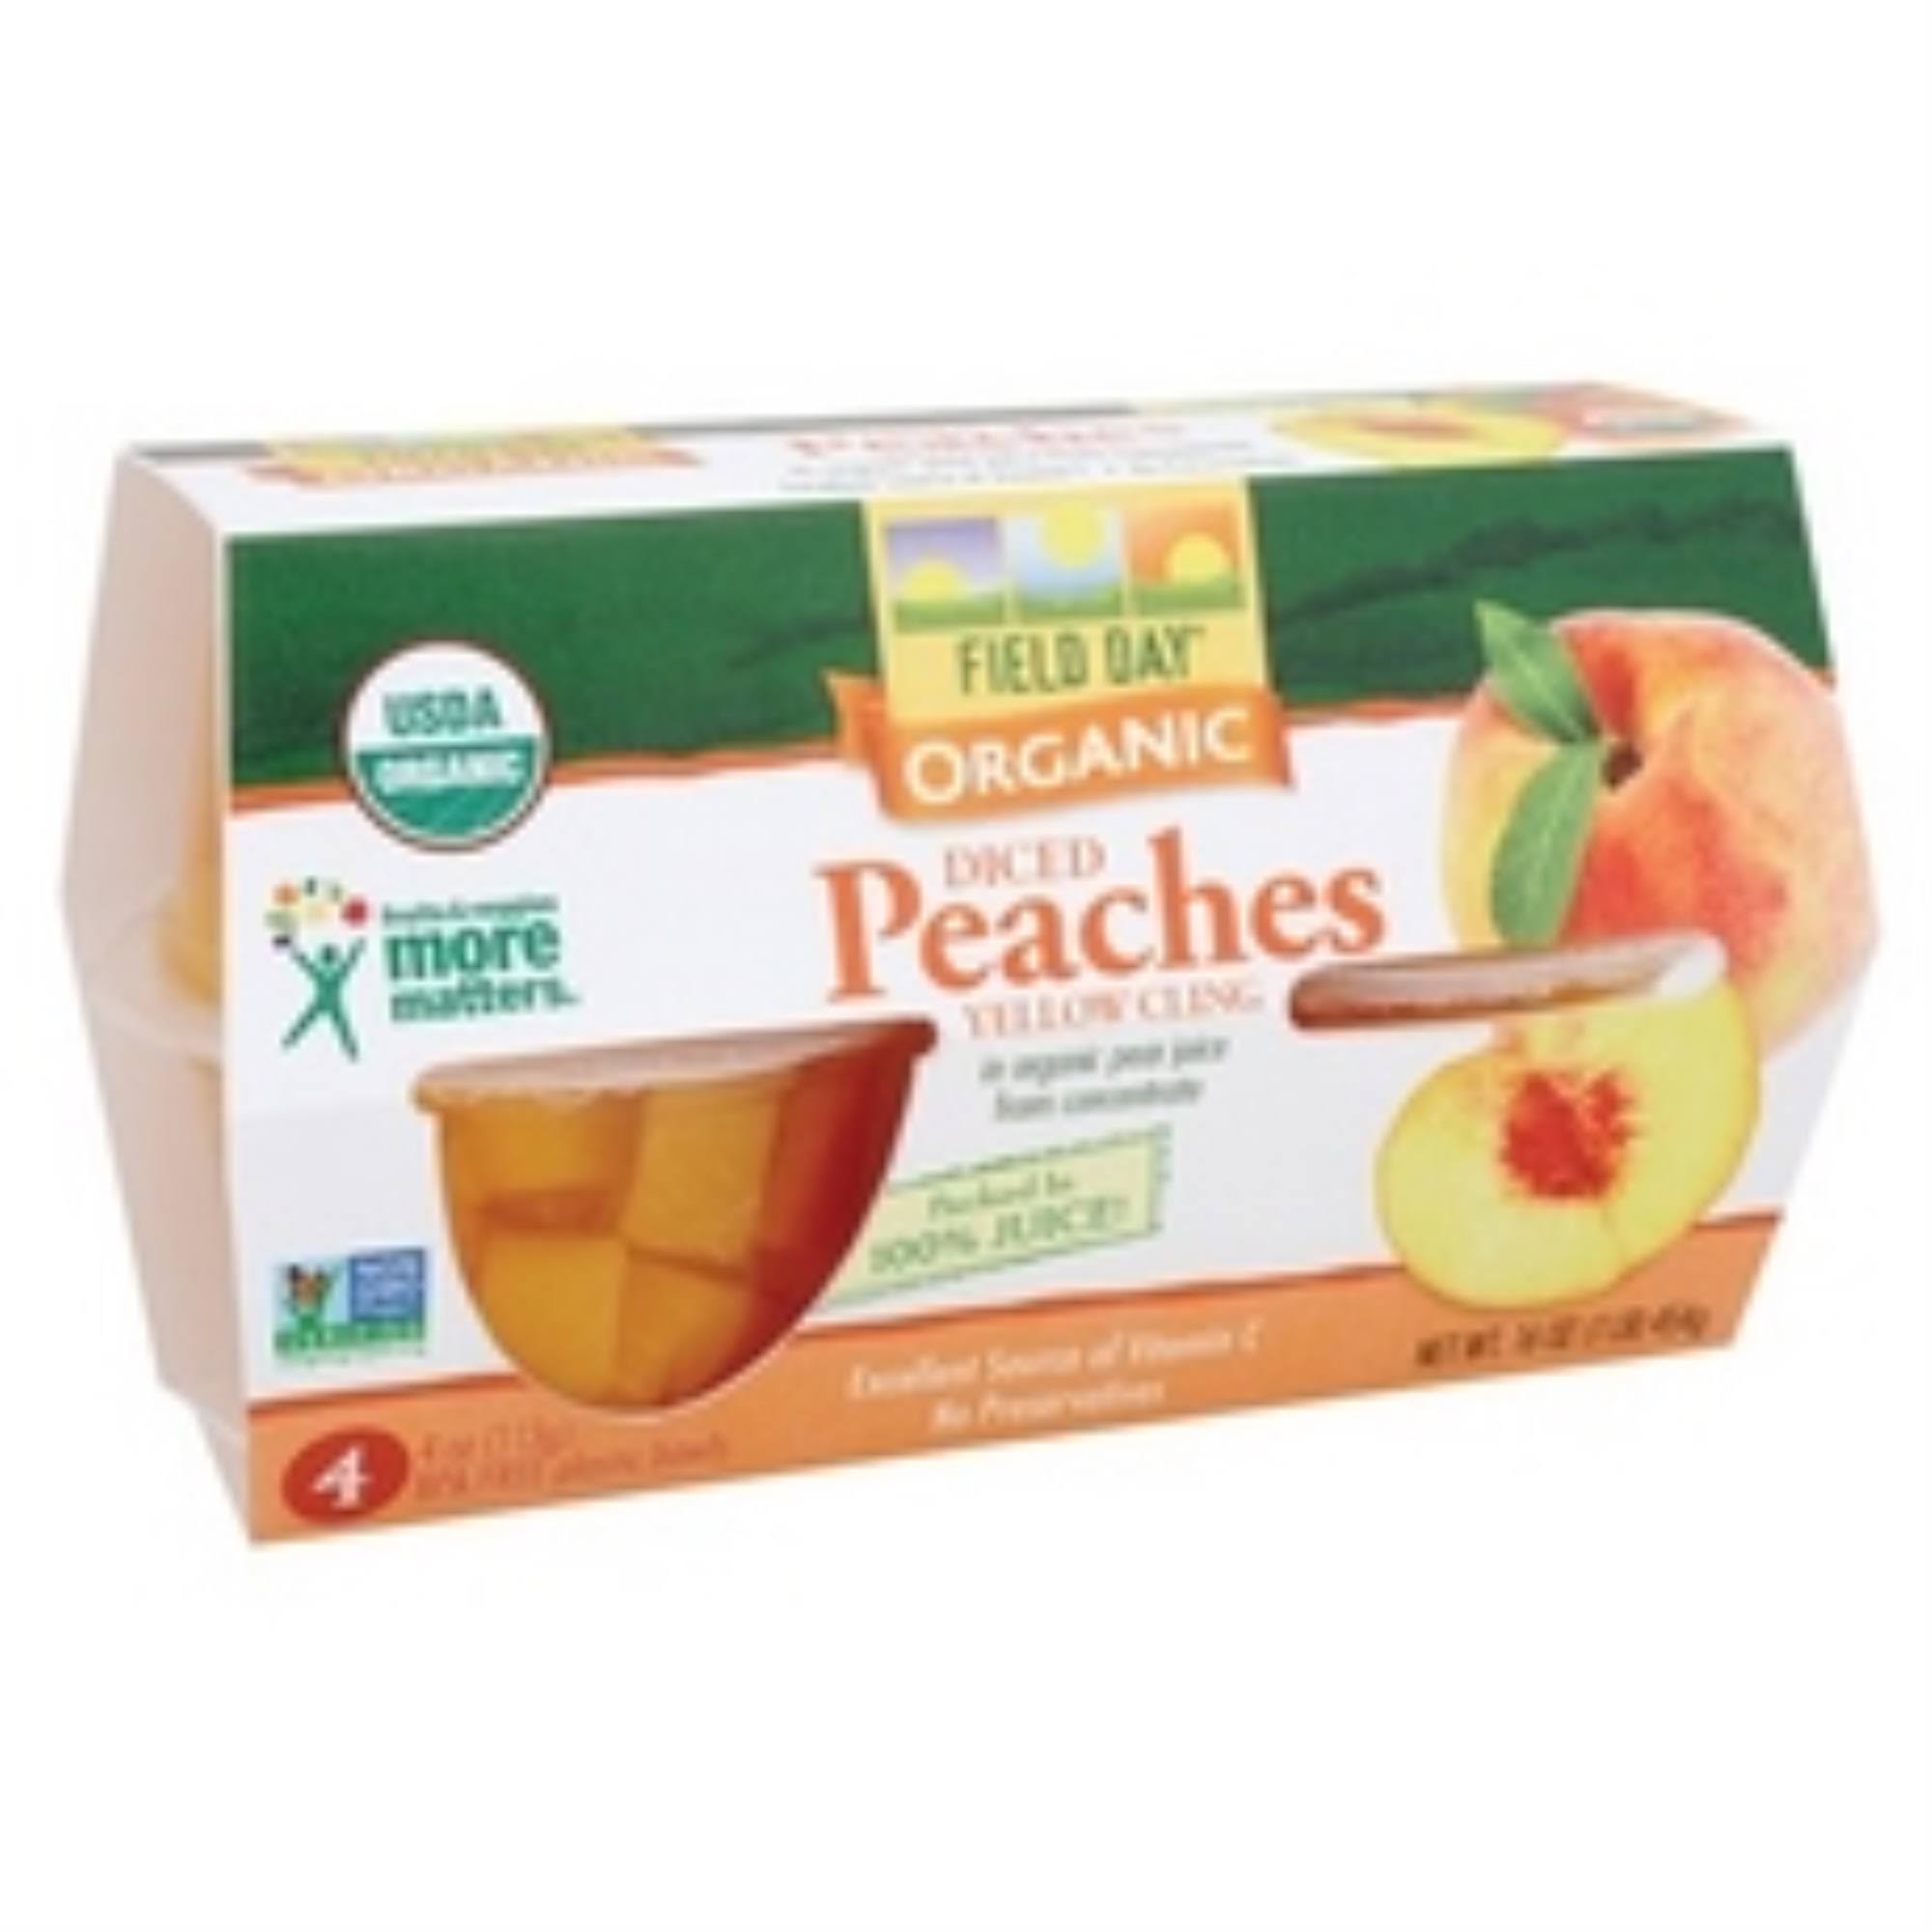 Field Day Organic Diced Peaches - 113g